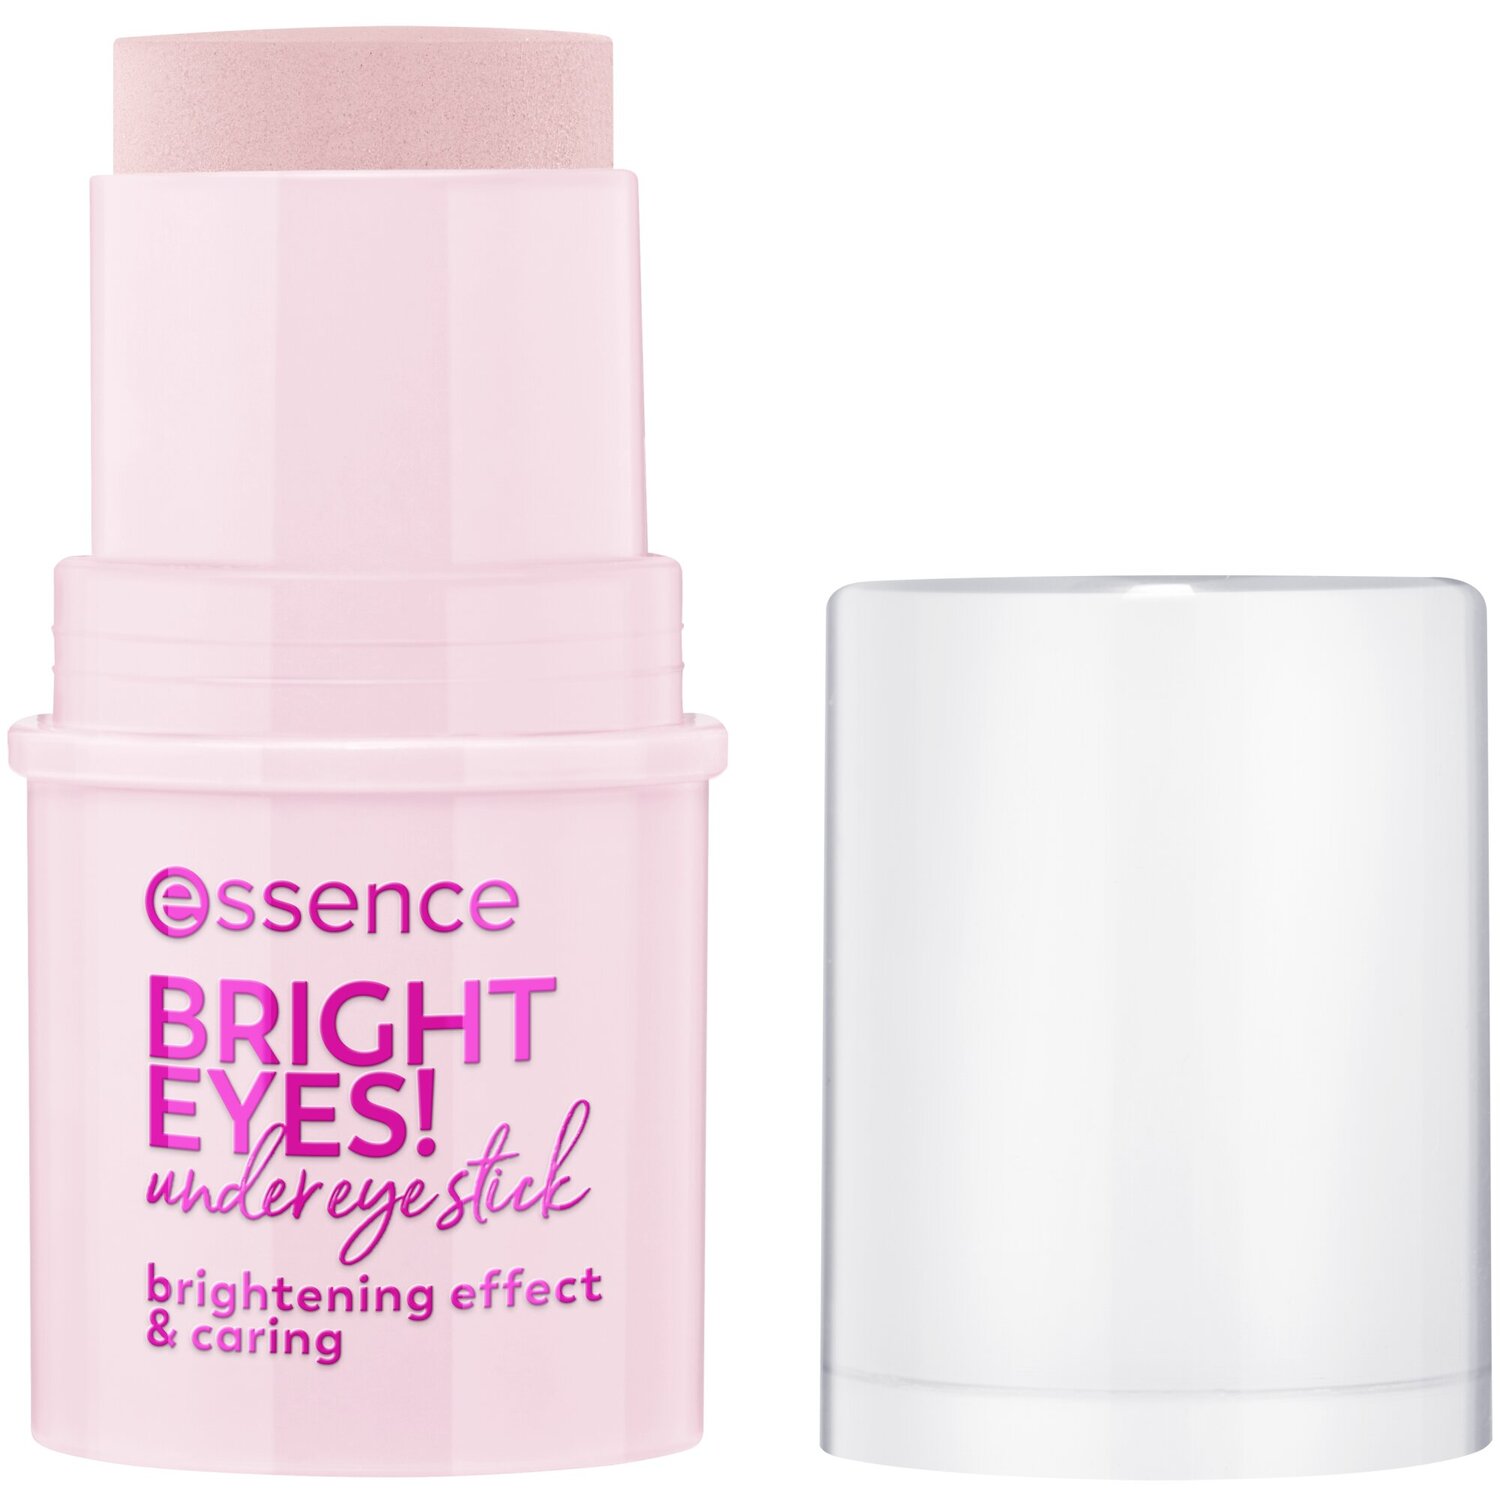 essence Bright Eyes Under-Eye Stick - Pink Image 1